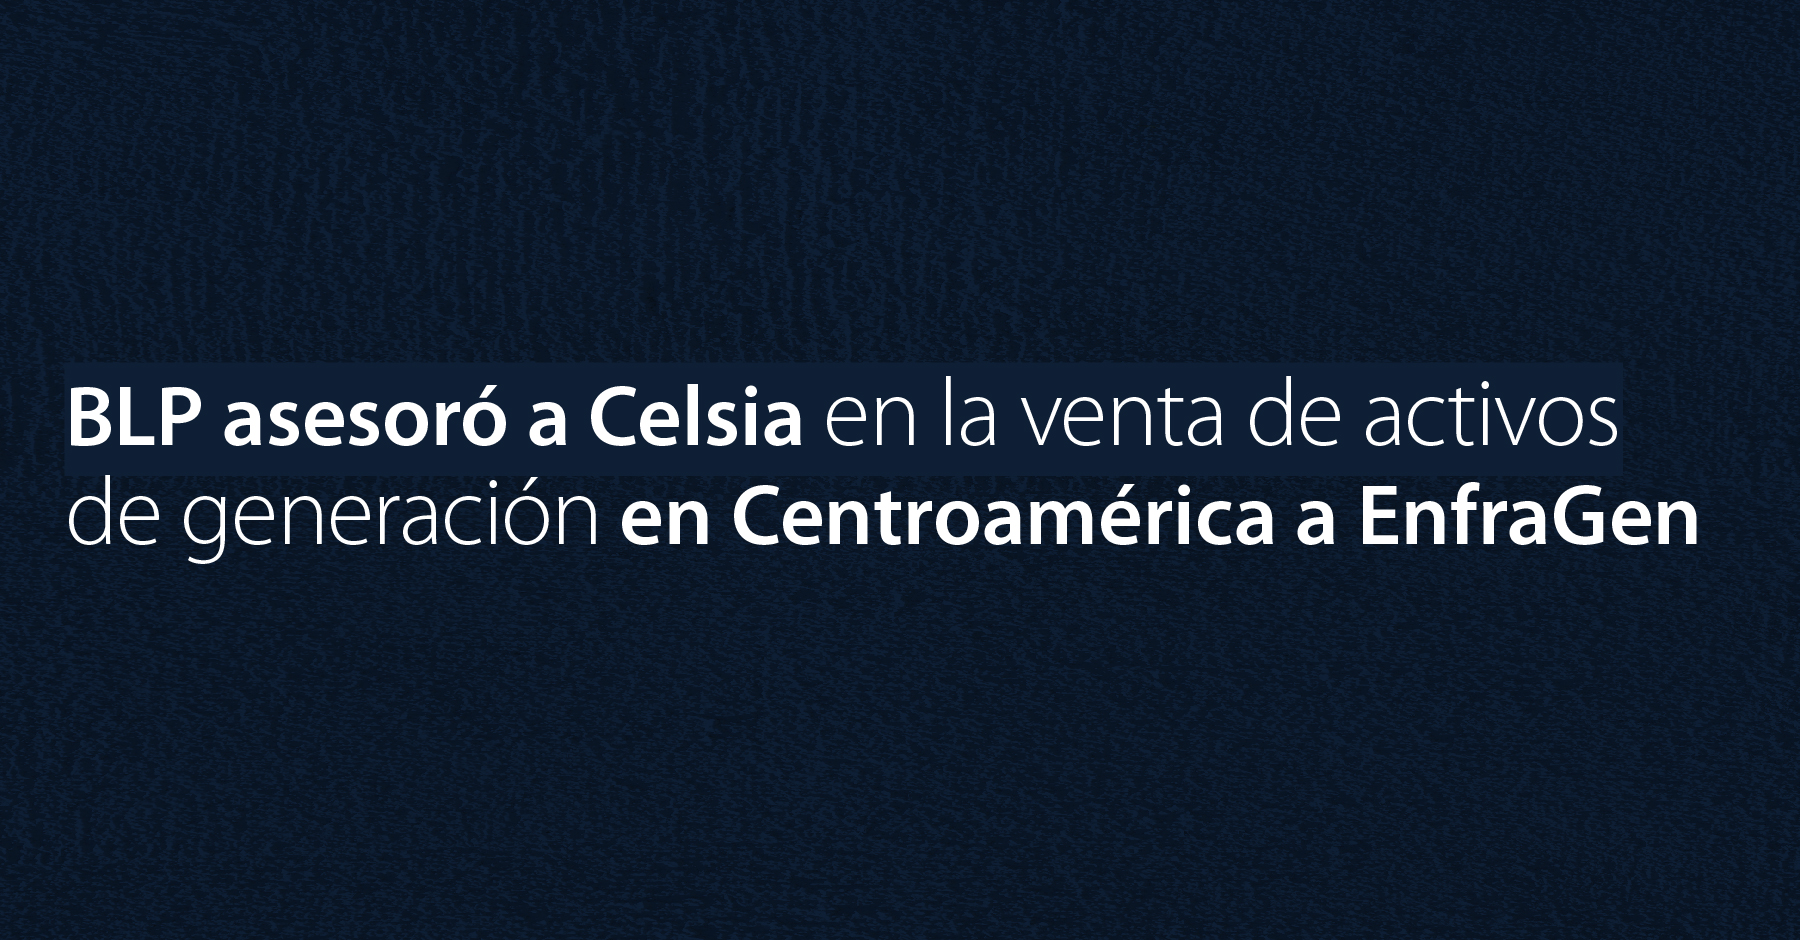 BLP asesoró a Celsia en la venta de activos de generación en Centroamérica a EnfraGen